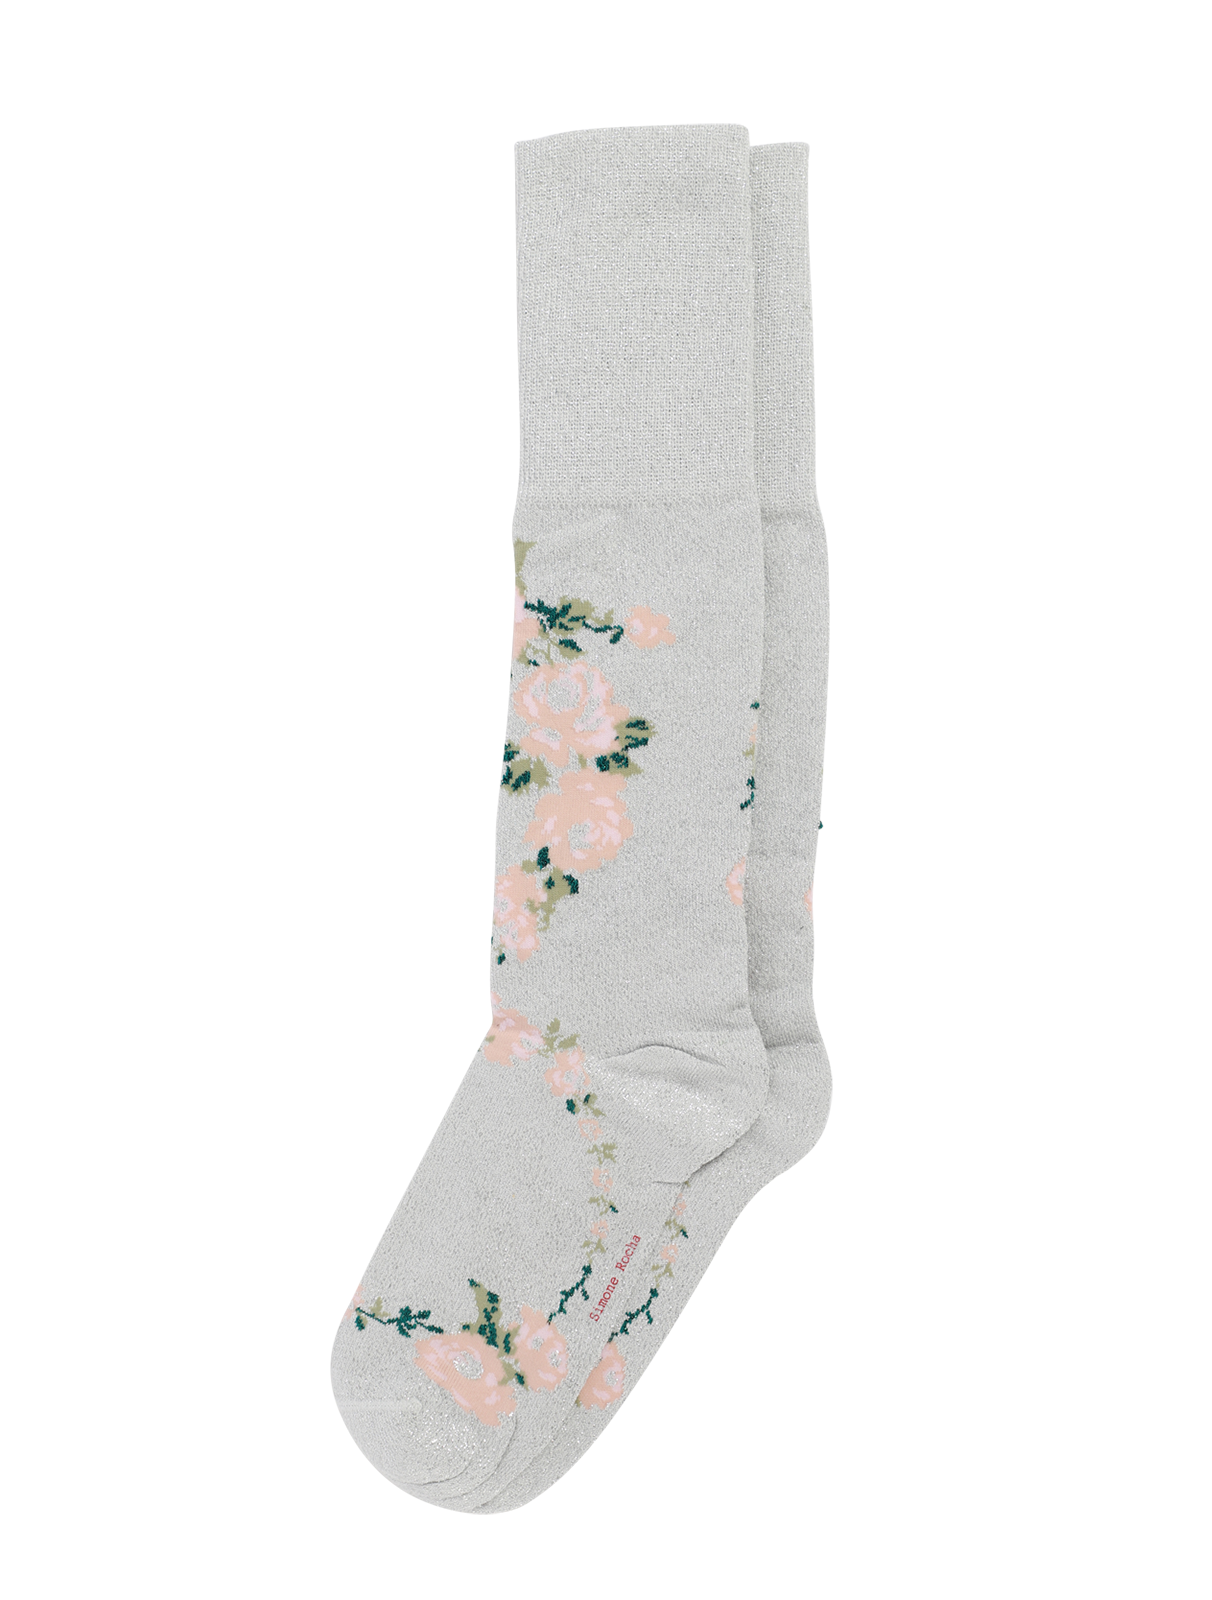 Lurex Jacquard Rosebud Socks